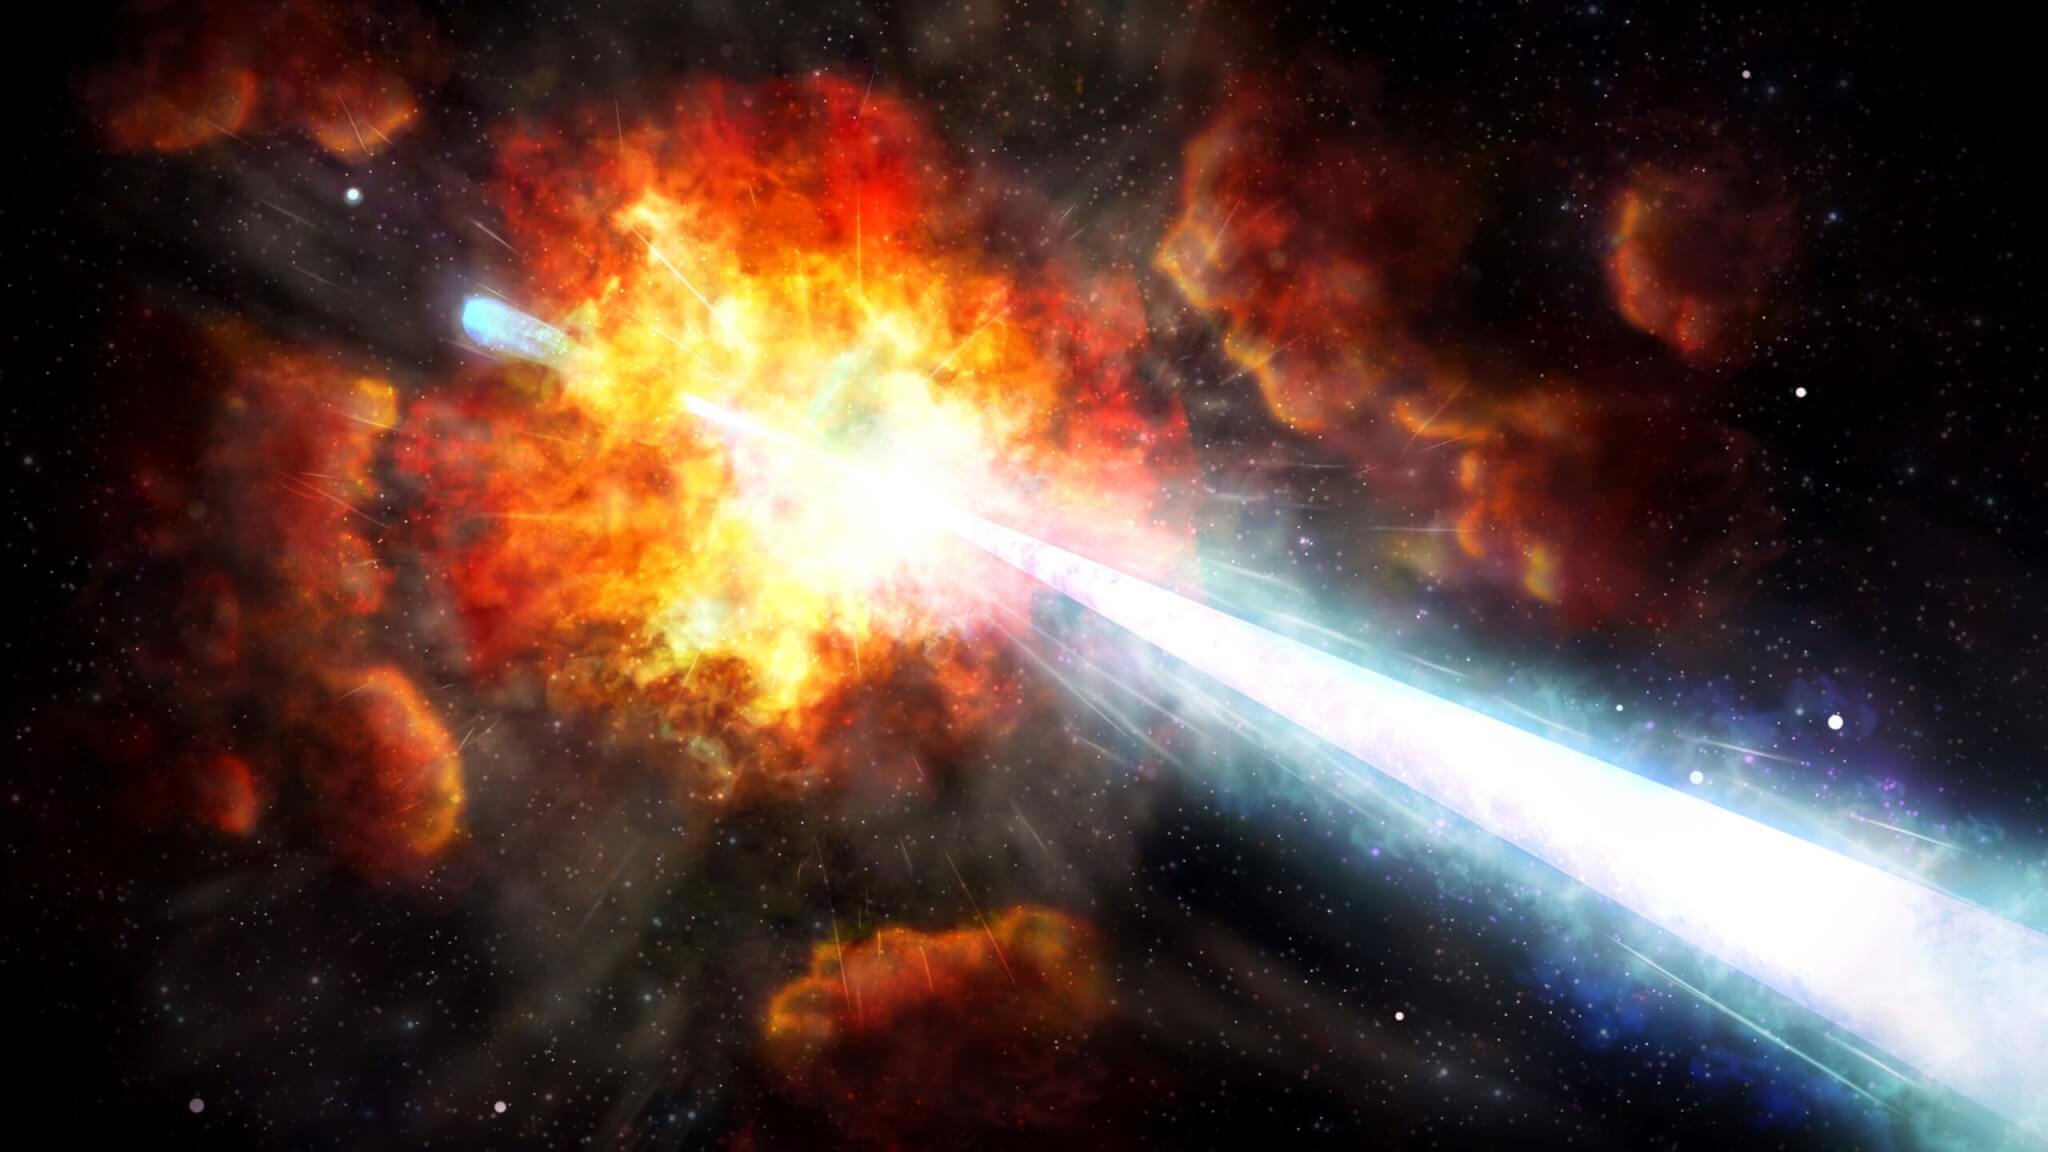 Brightest gamma-ray burst ever